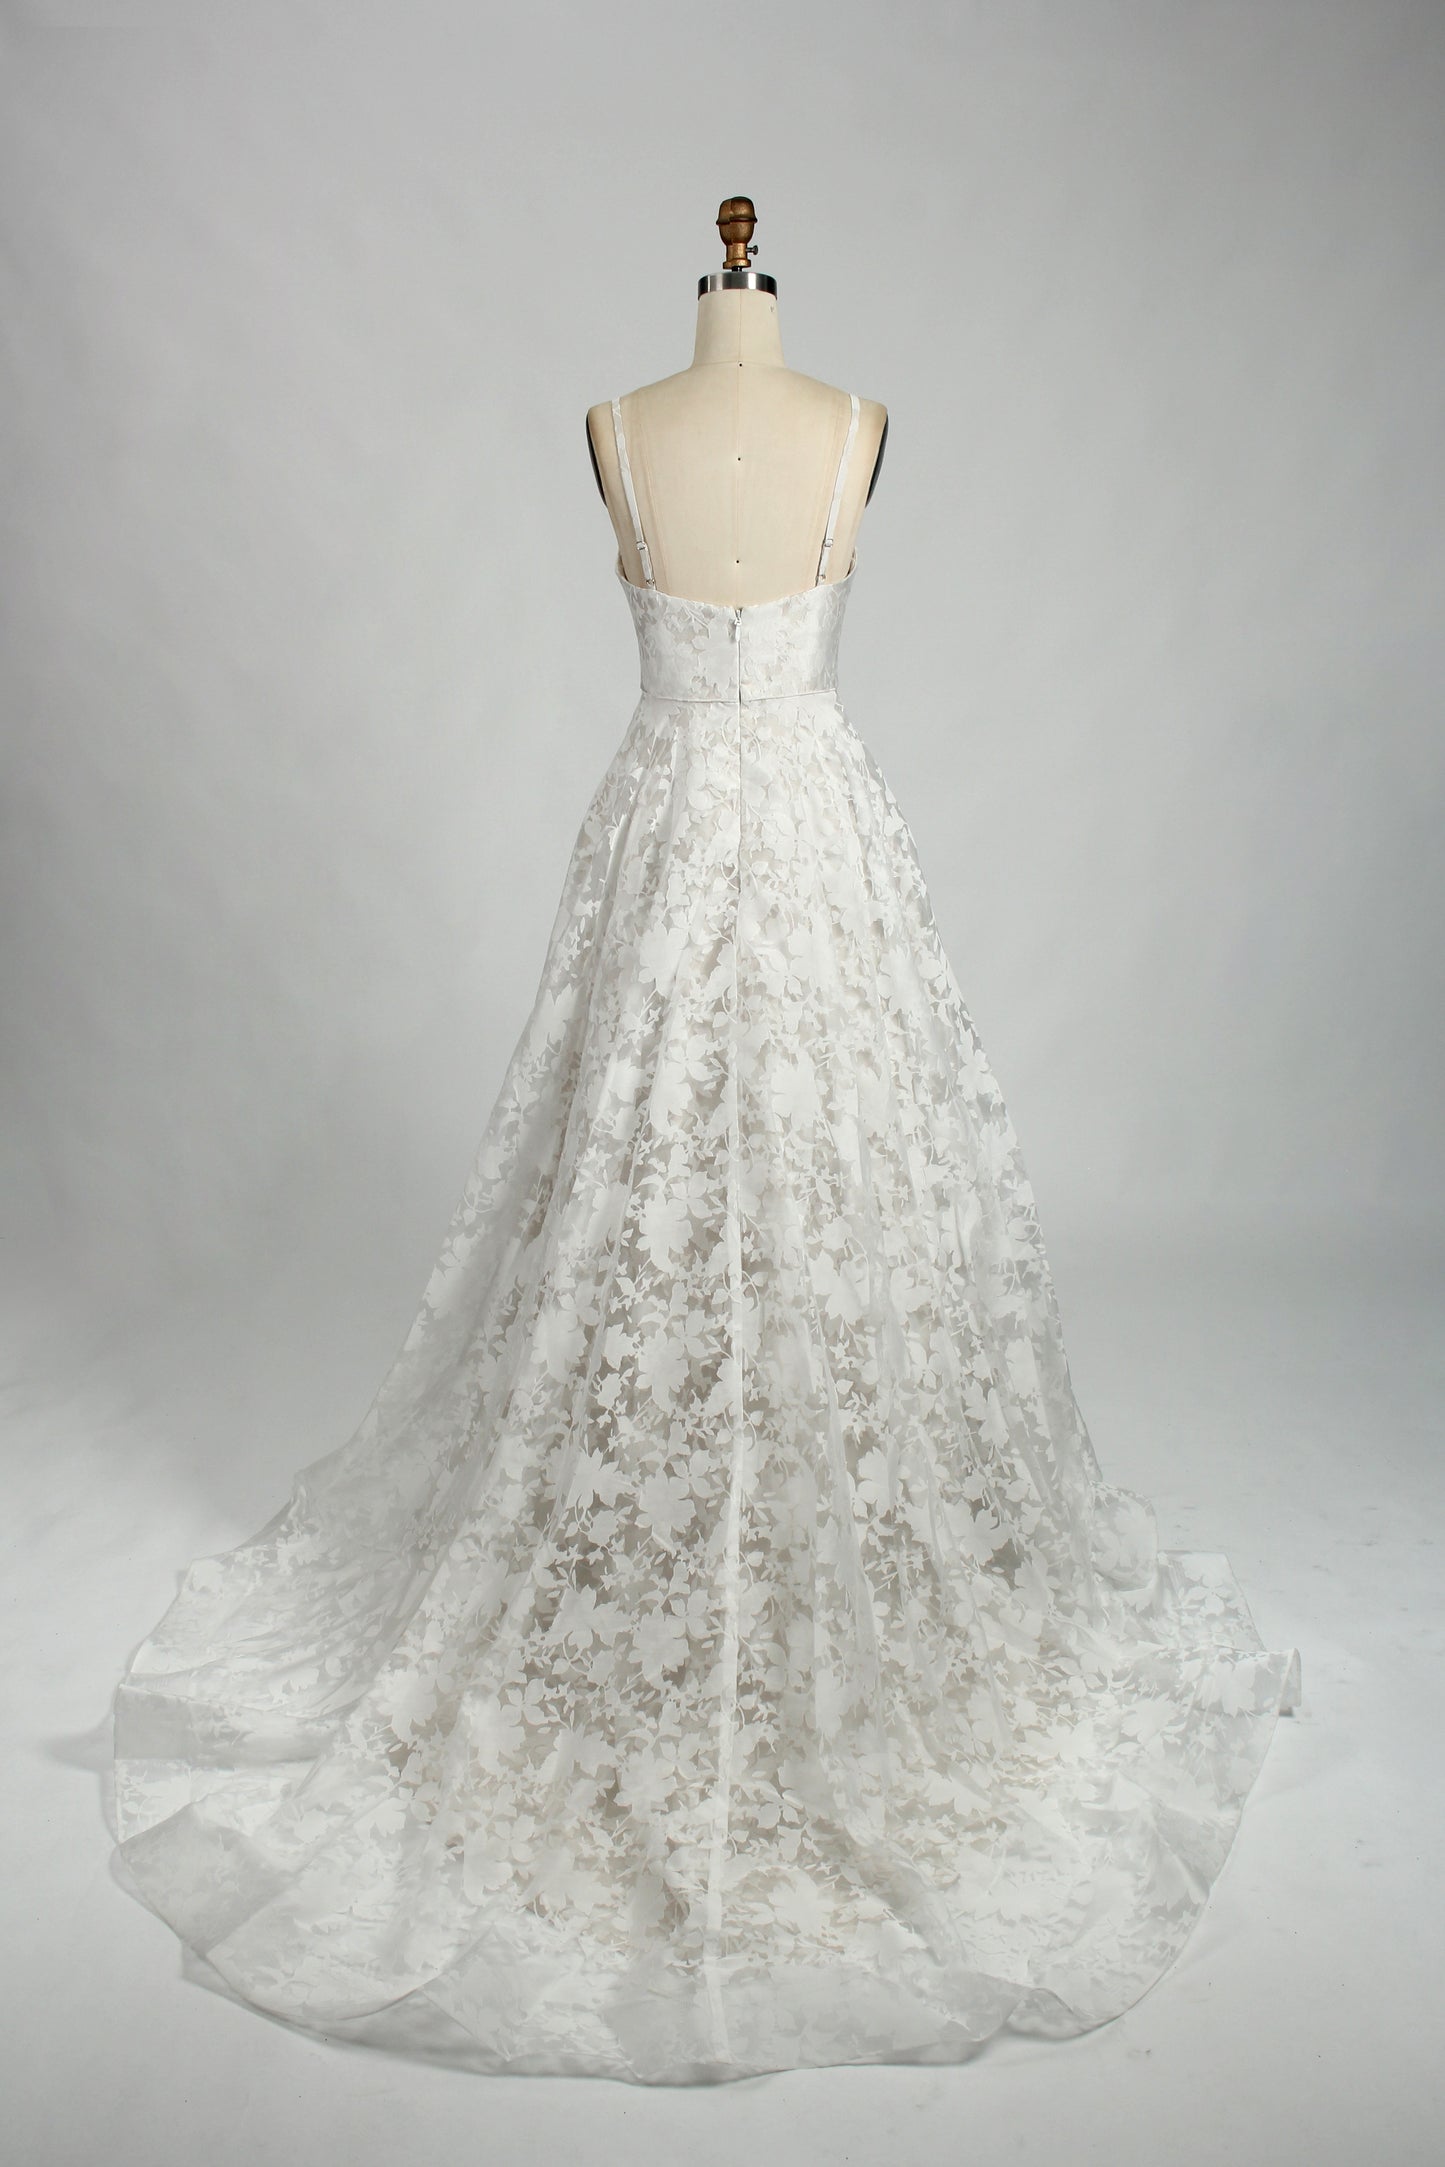 Exquisite Plus Size Wedding Gown with Petal Details - A Dreamy Choice 32845